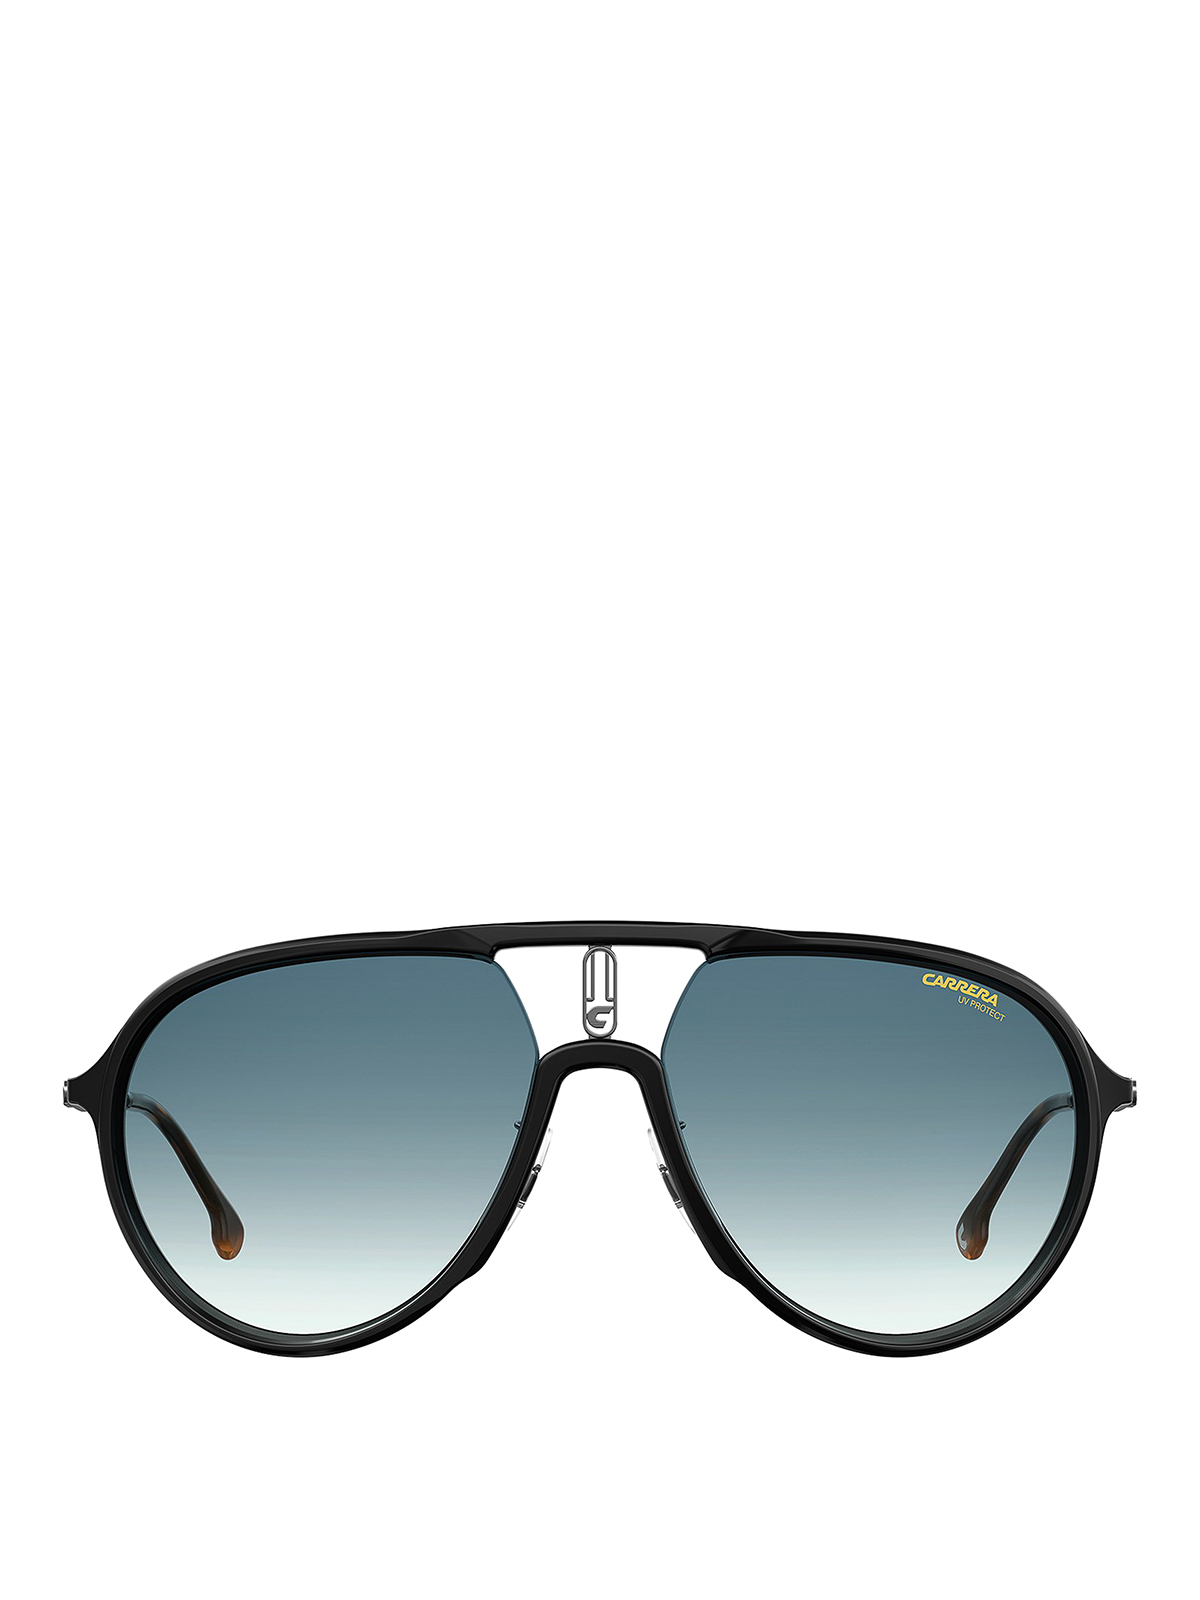 Sunglasses Carrera - Aviator full-frame sunglasses - CARRERA1026S28408